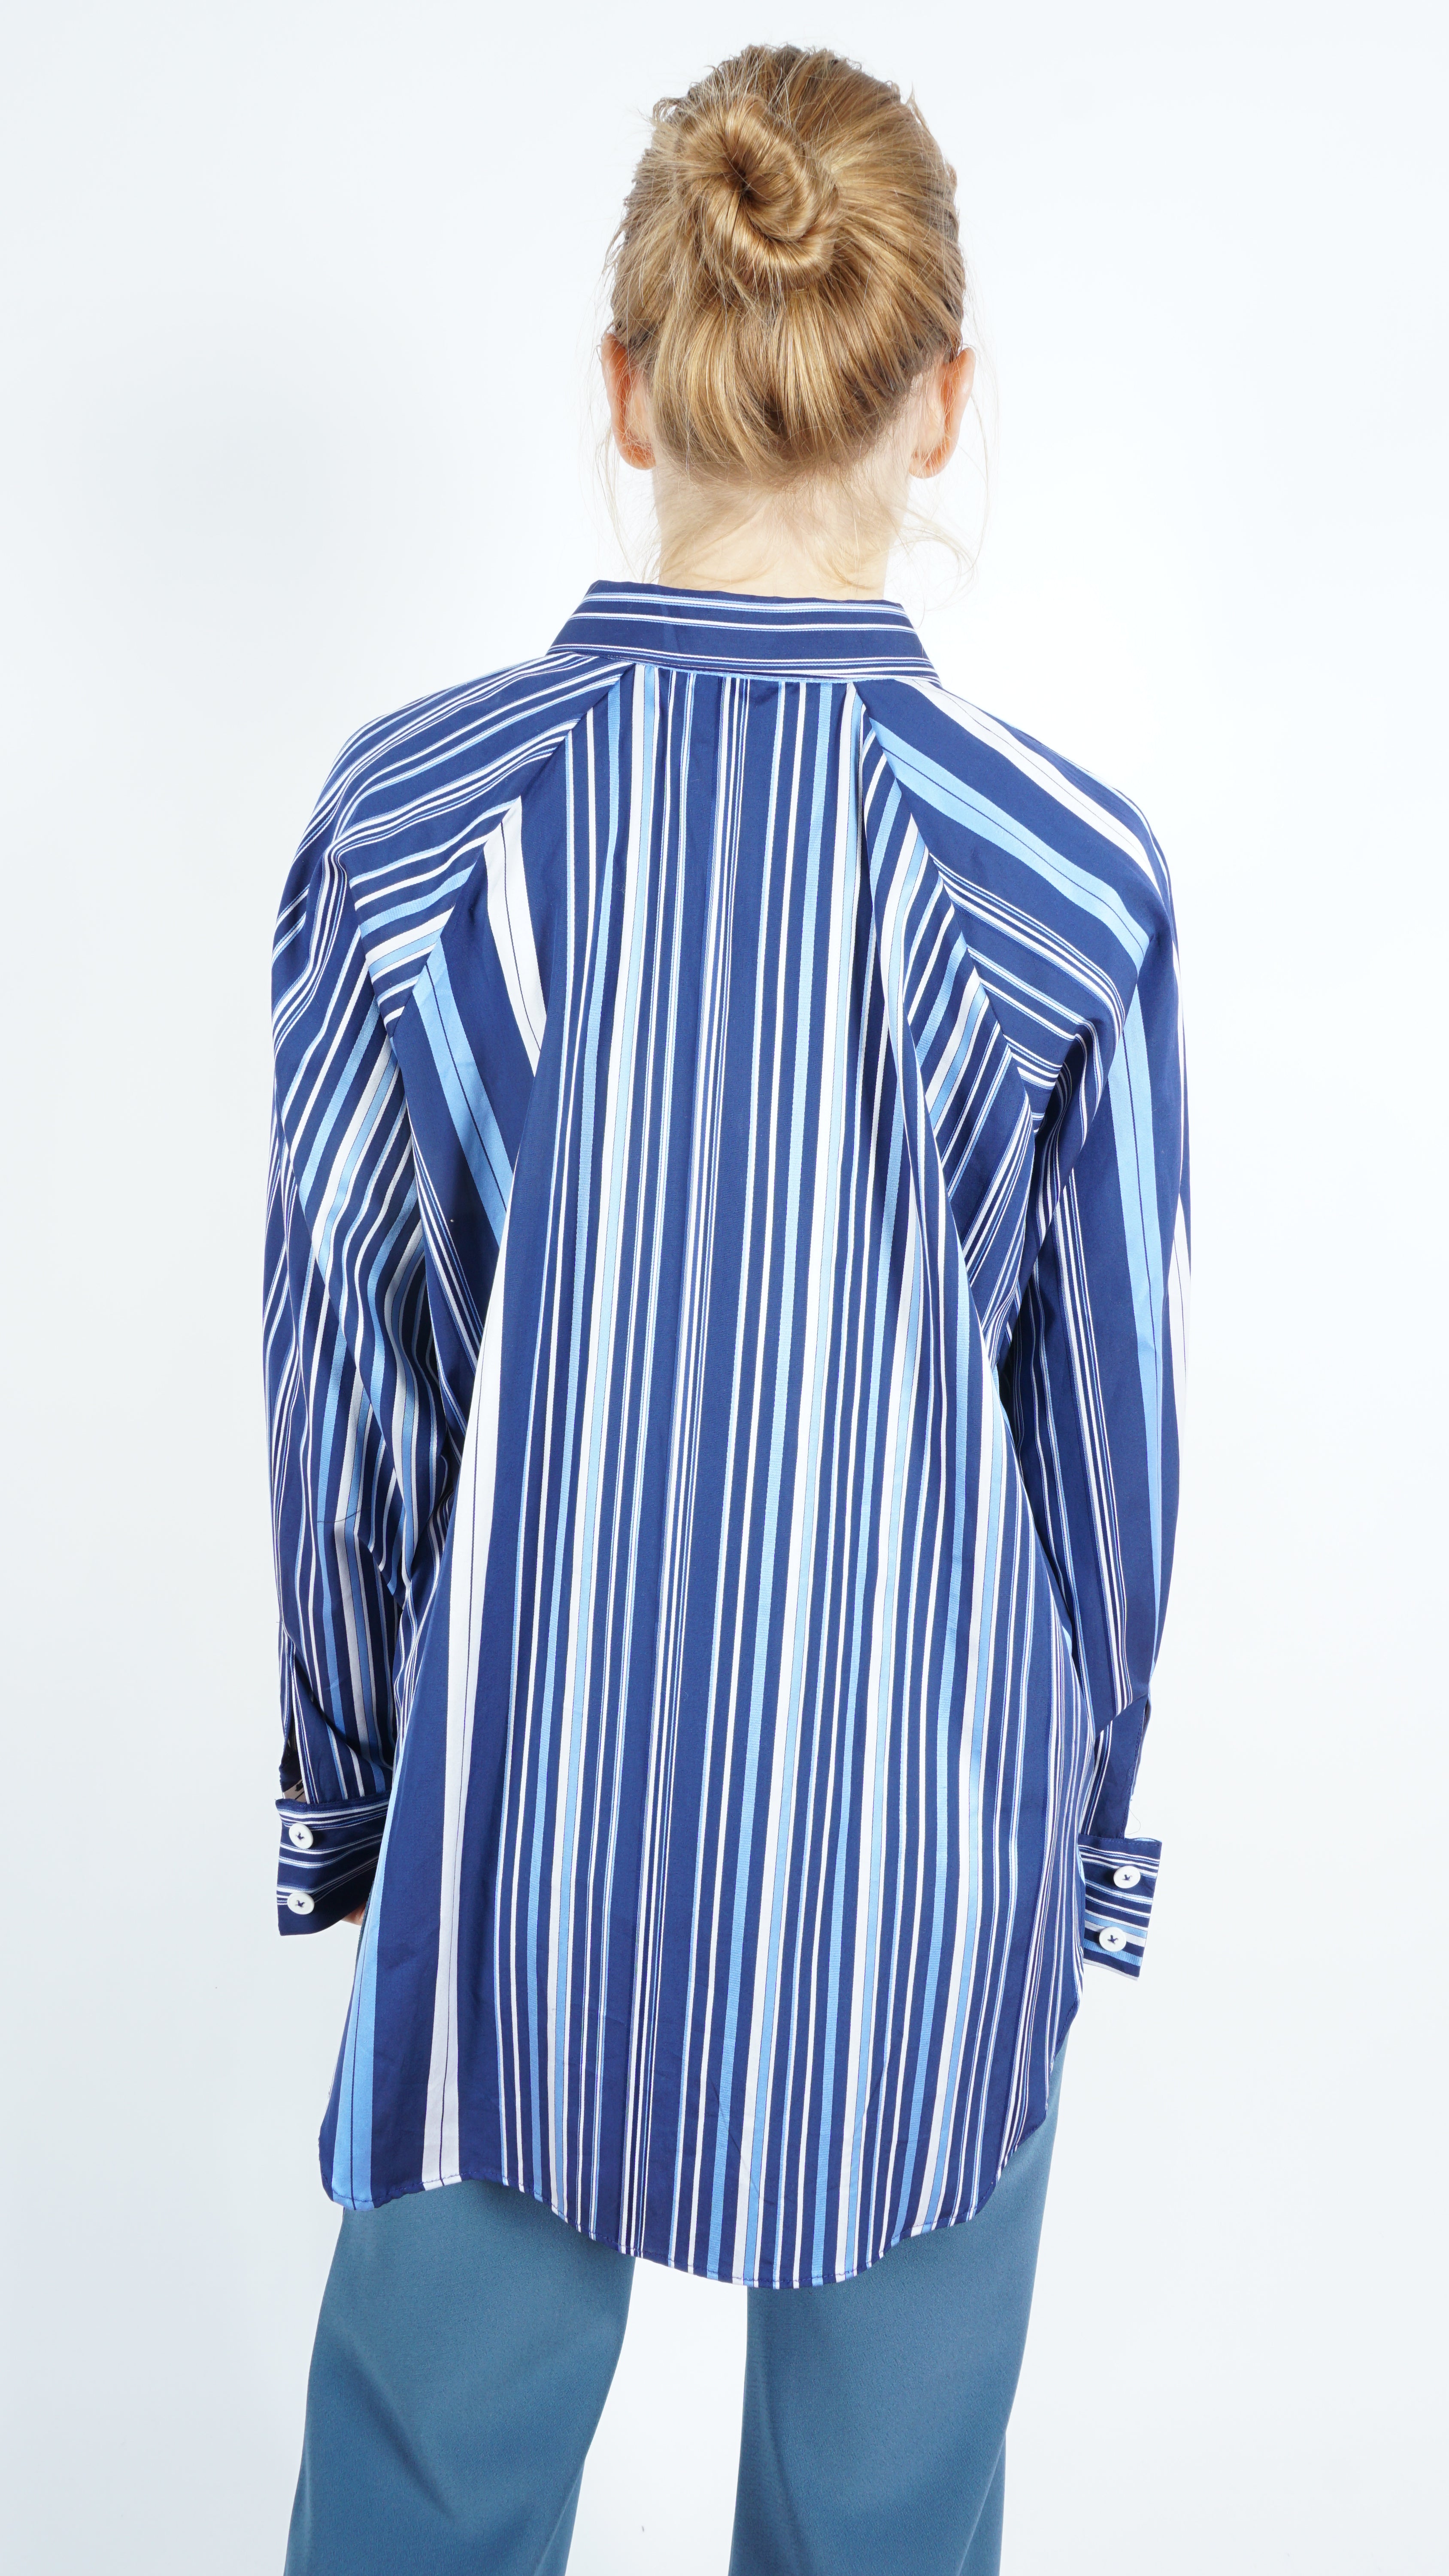 Striped shirt by Sabine Poupinel